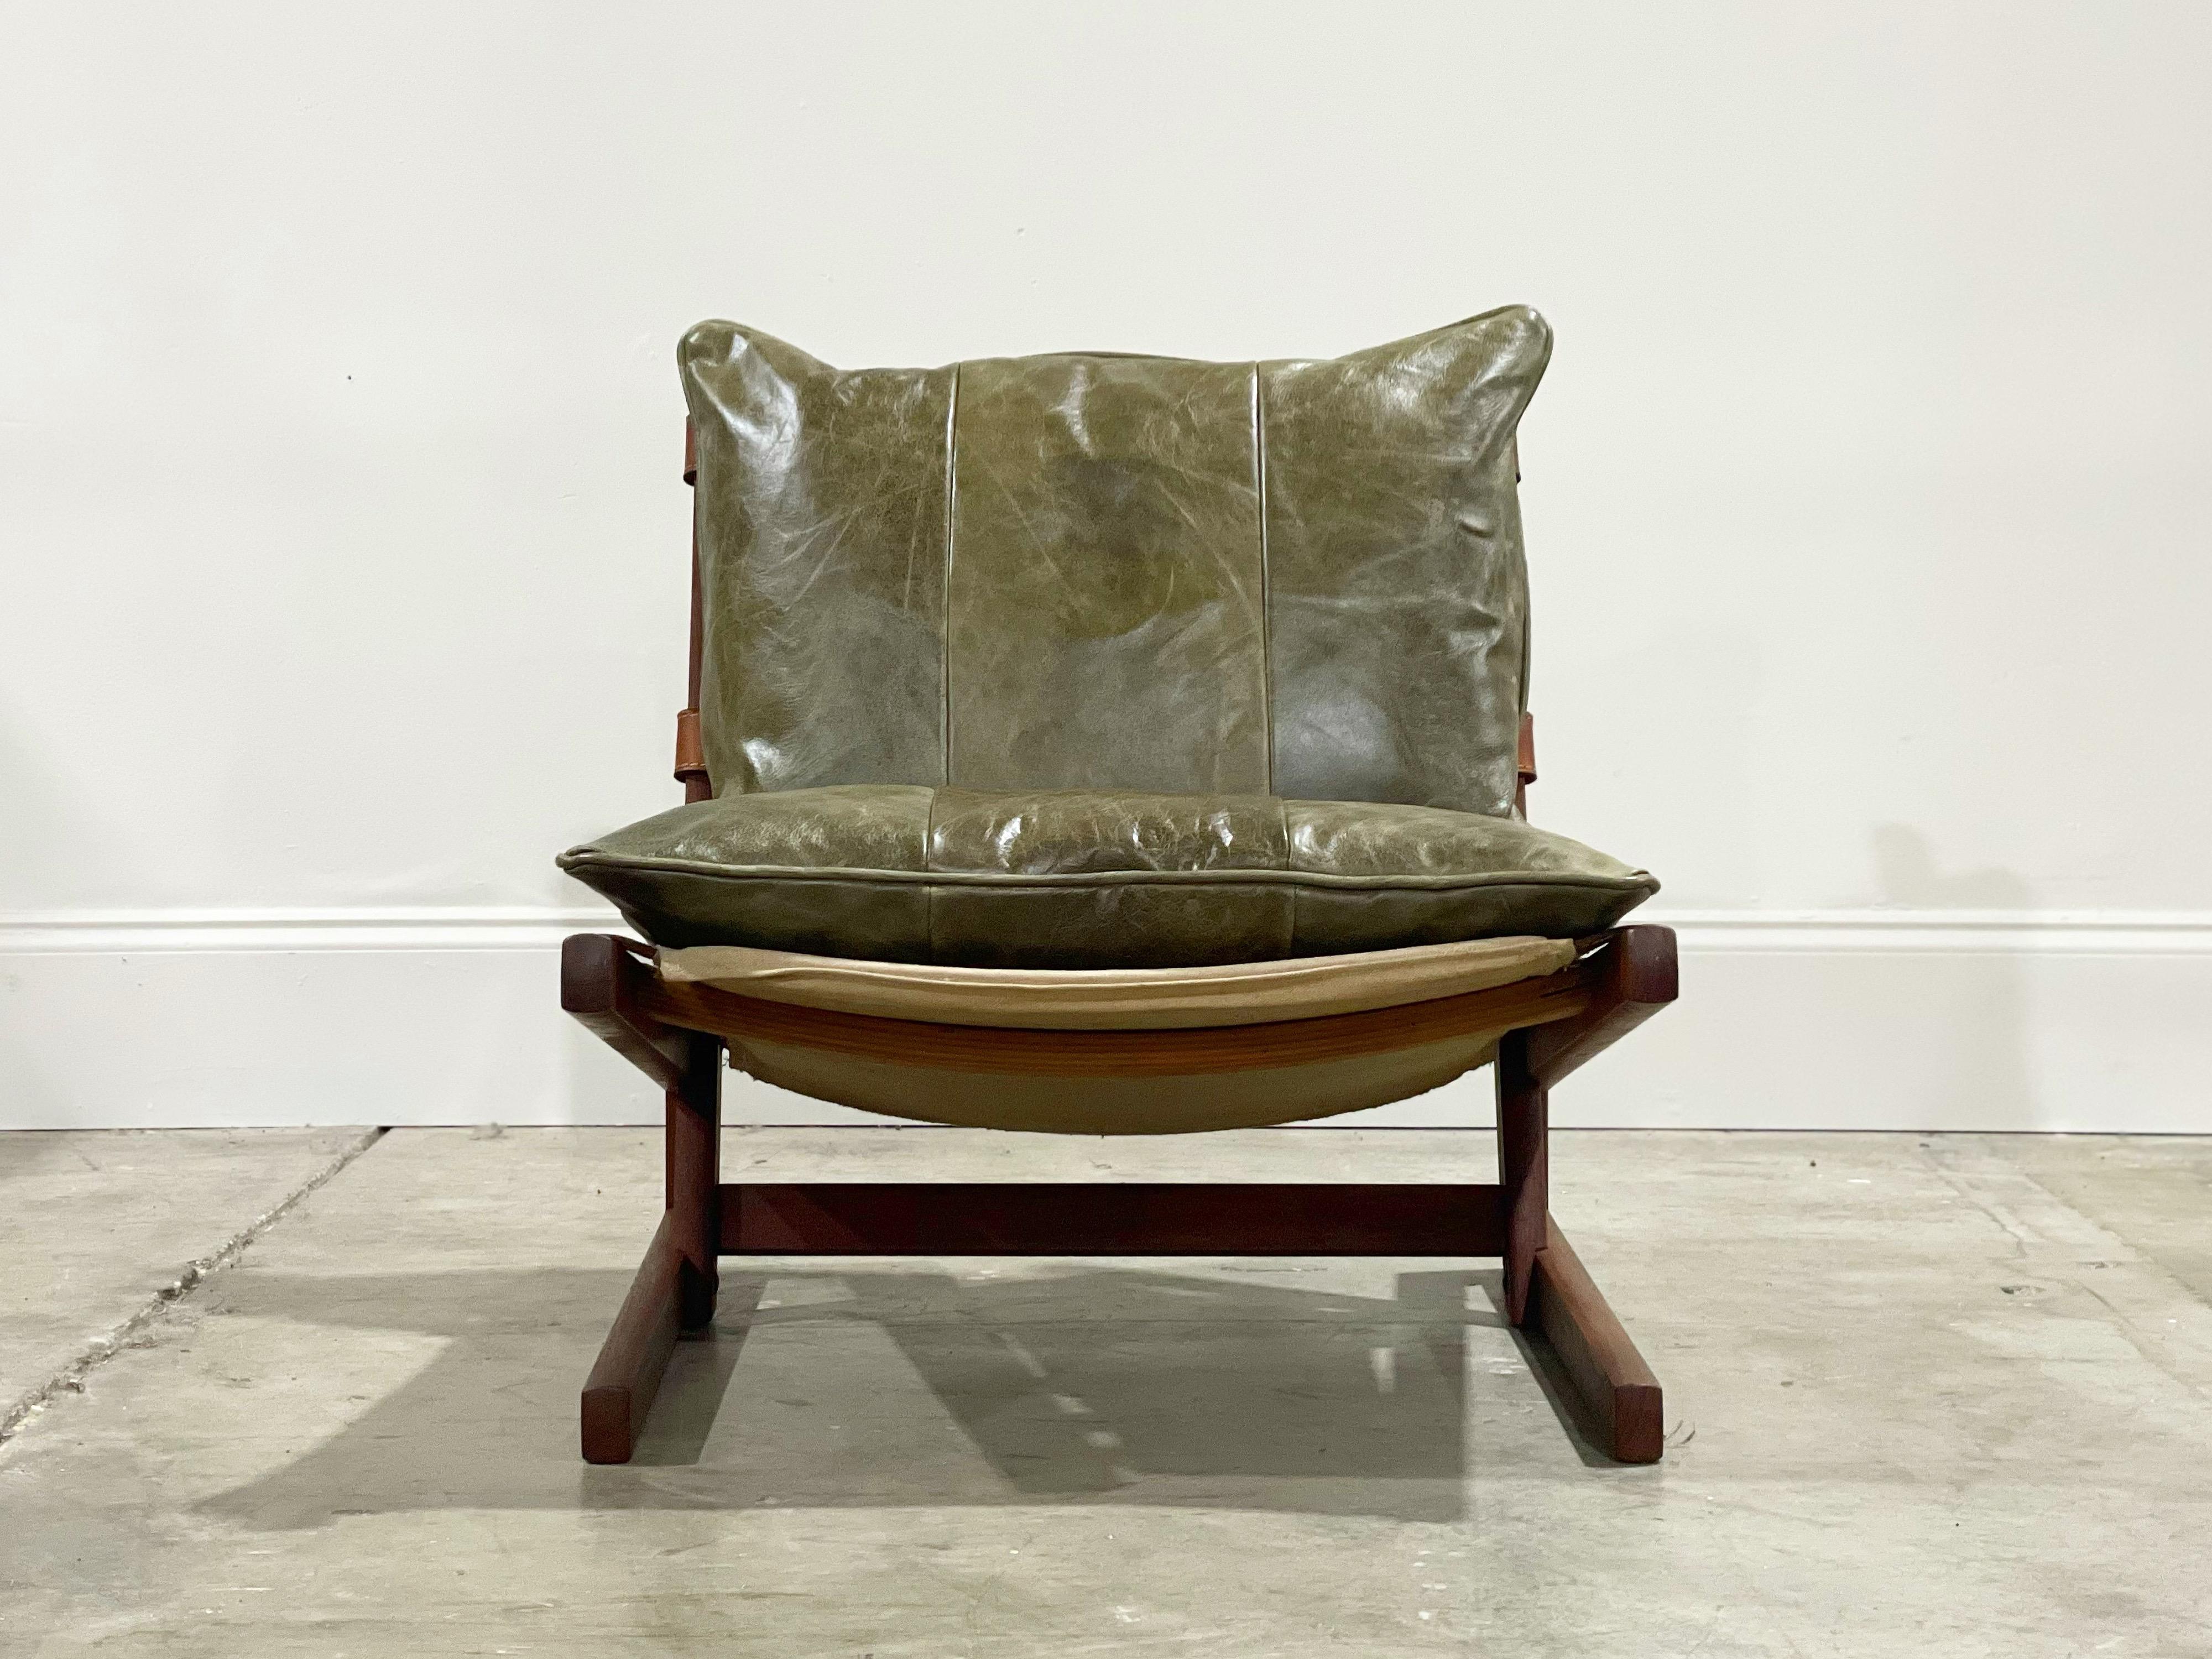 Rare Cantilevered Scandinavian Lounge Chair in Teak + Leather, Jan Erik Lindgren 1